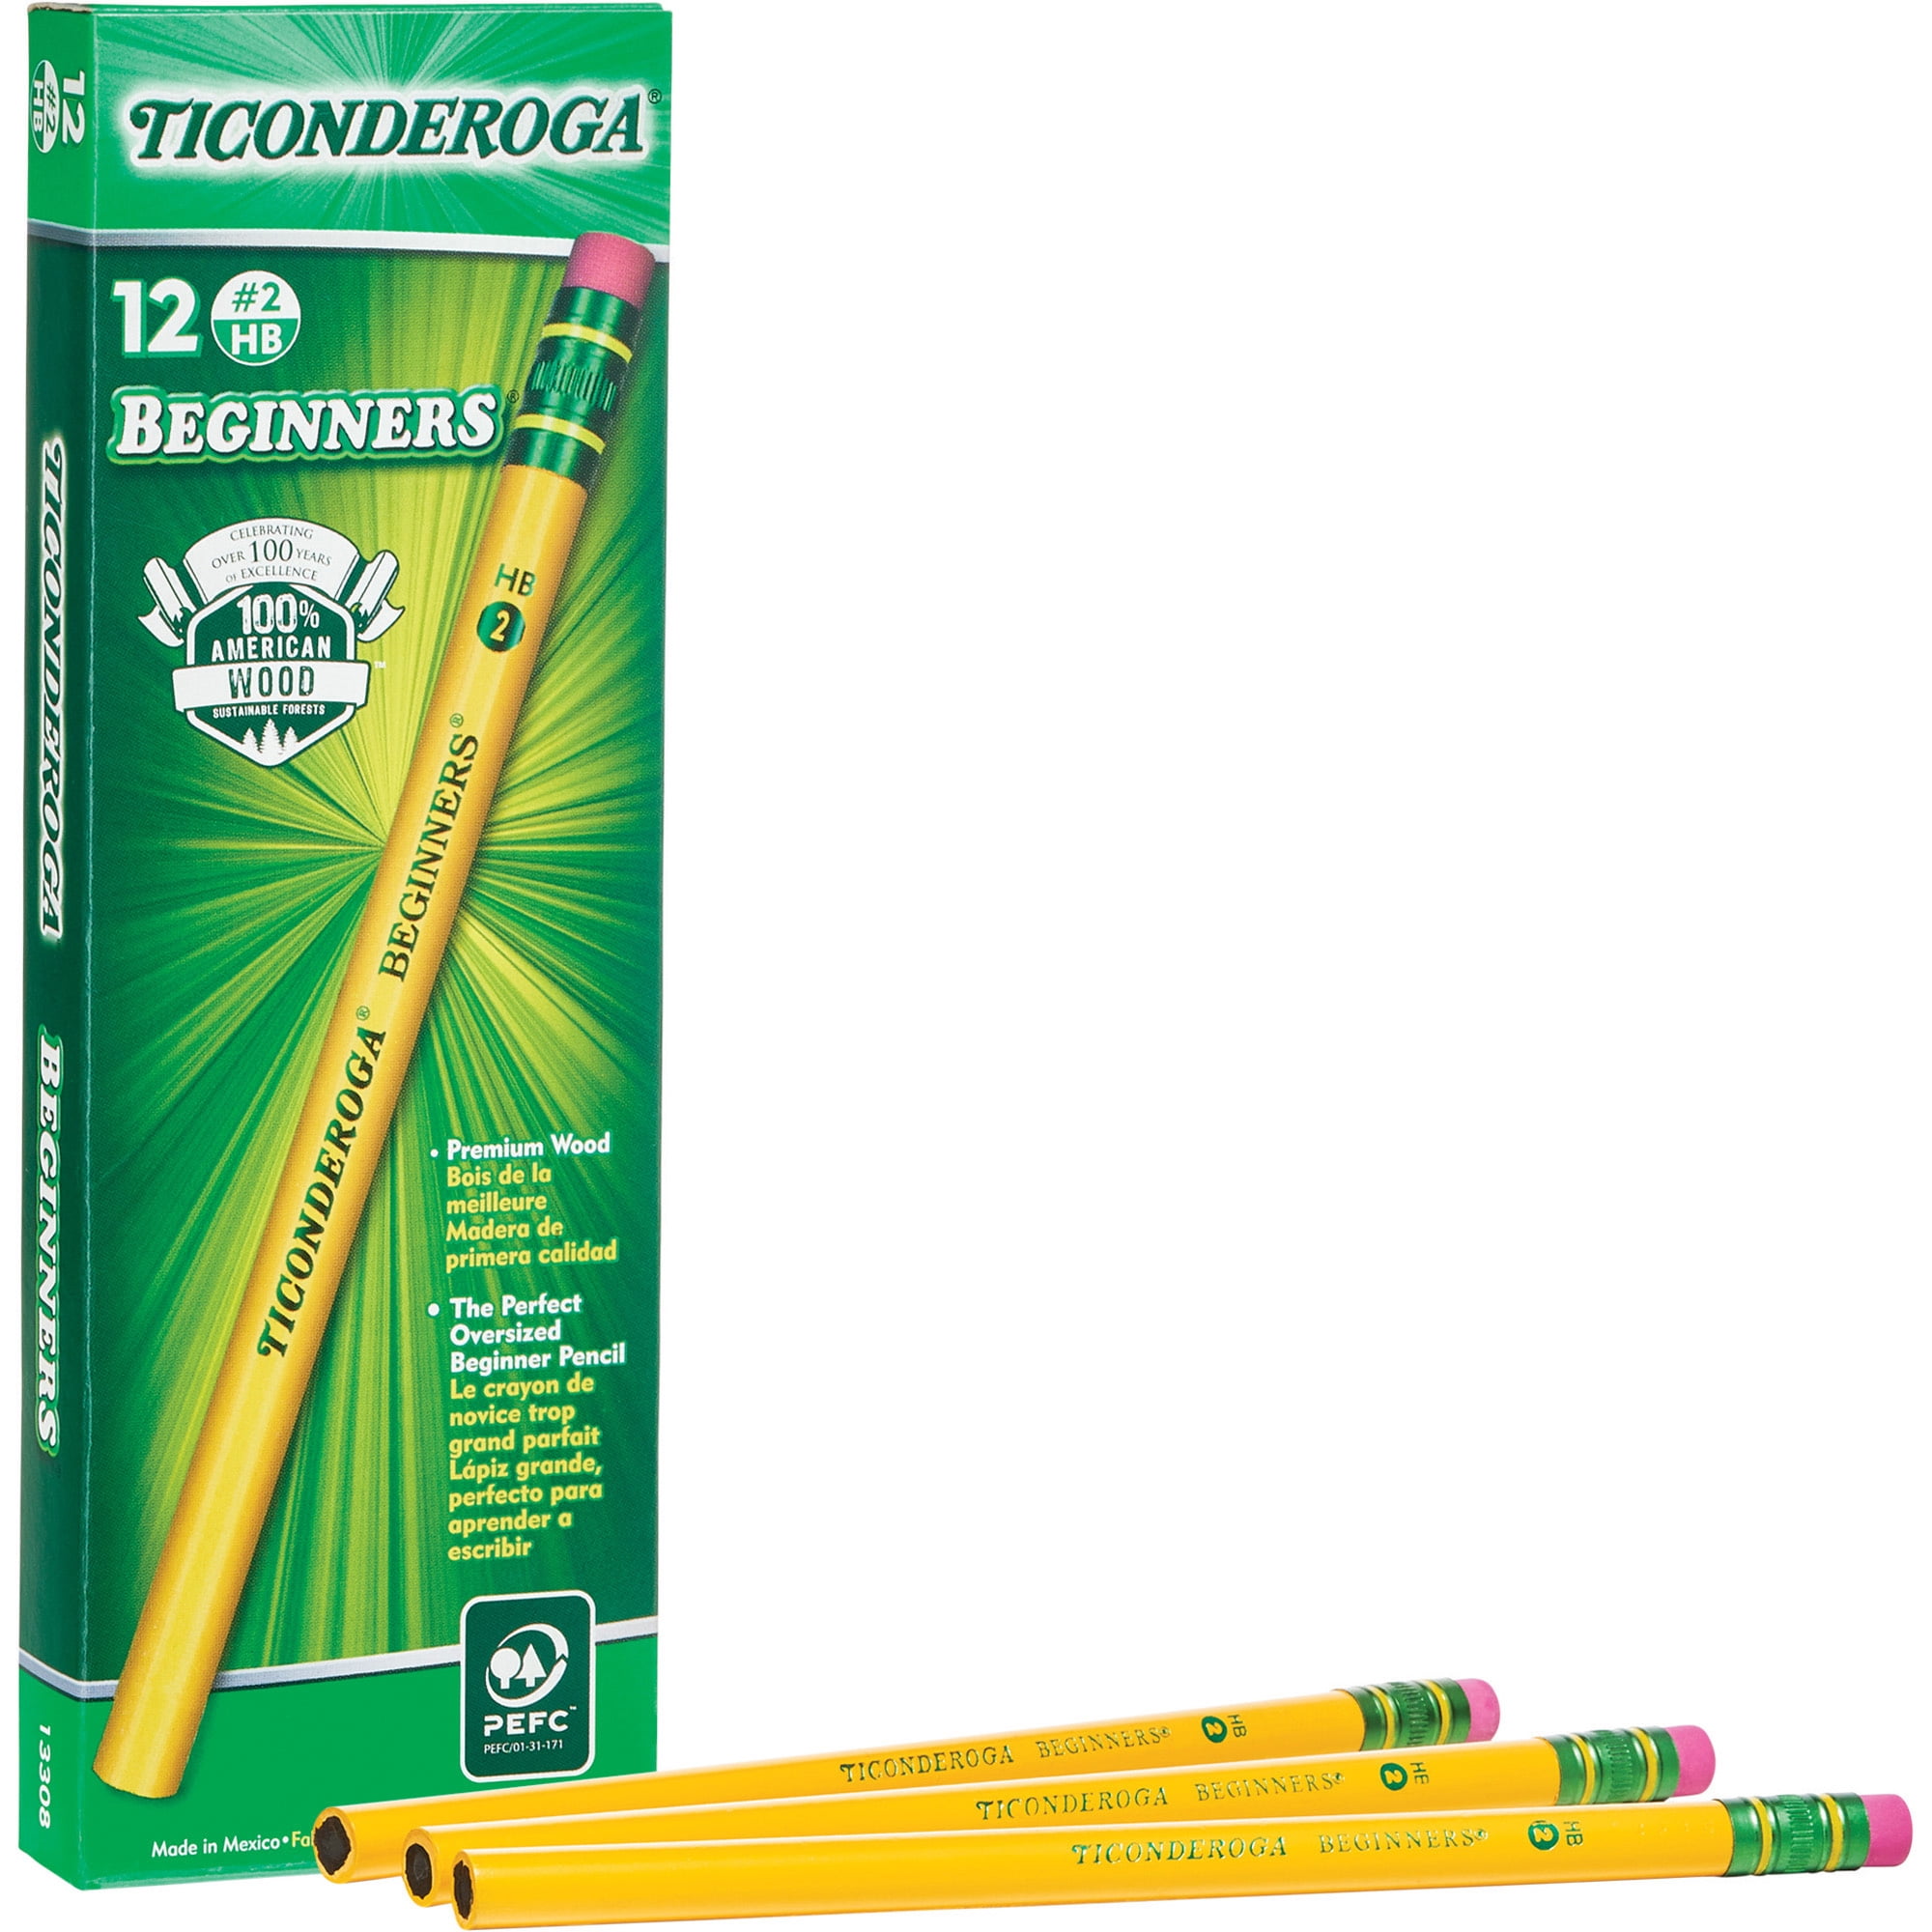 #2 Pencils Green Product 